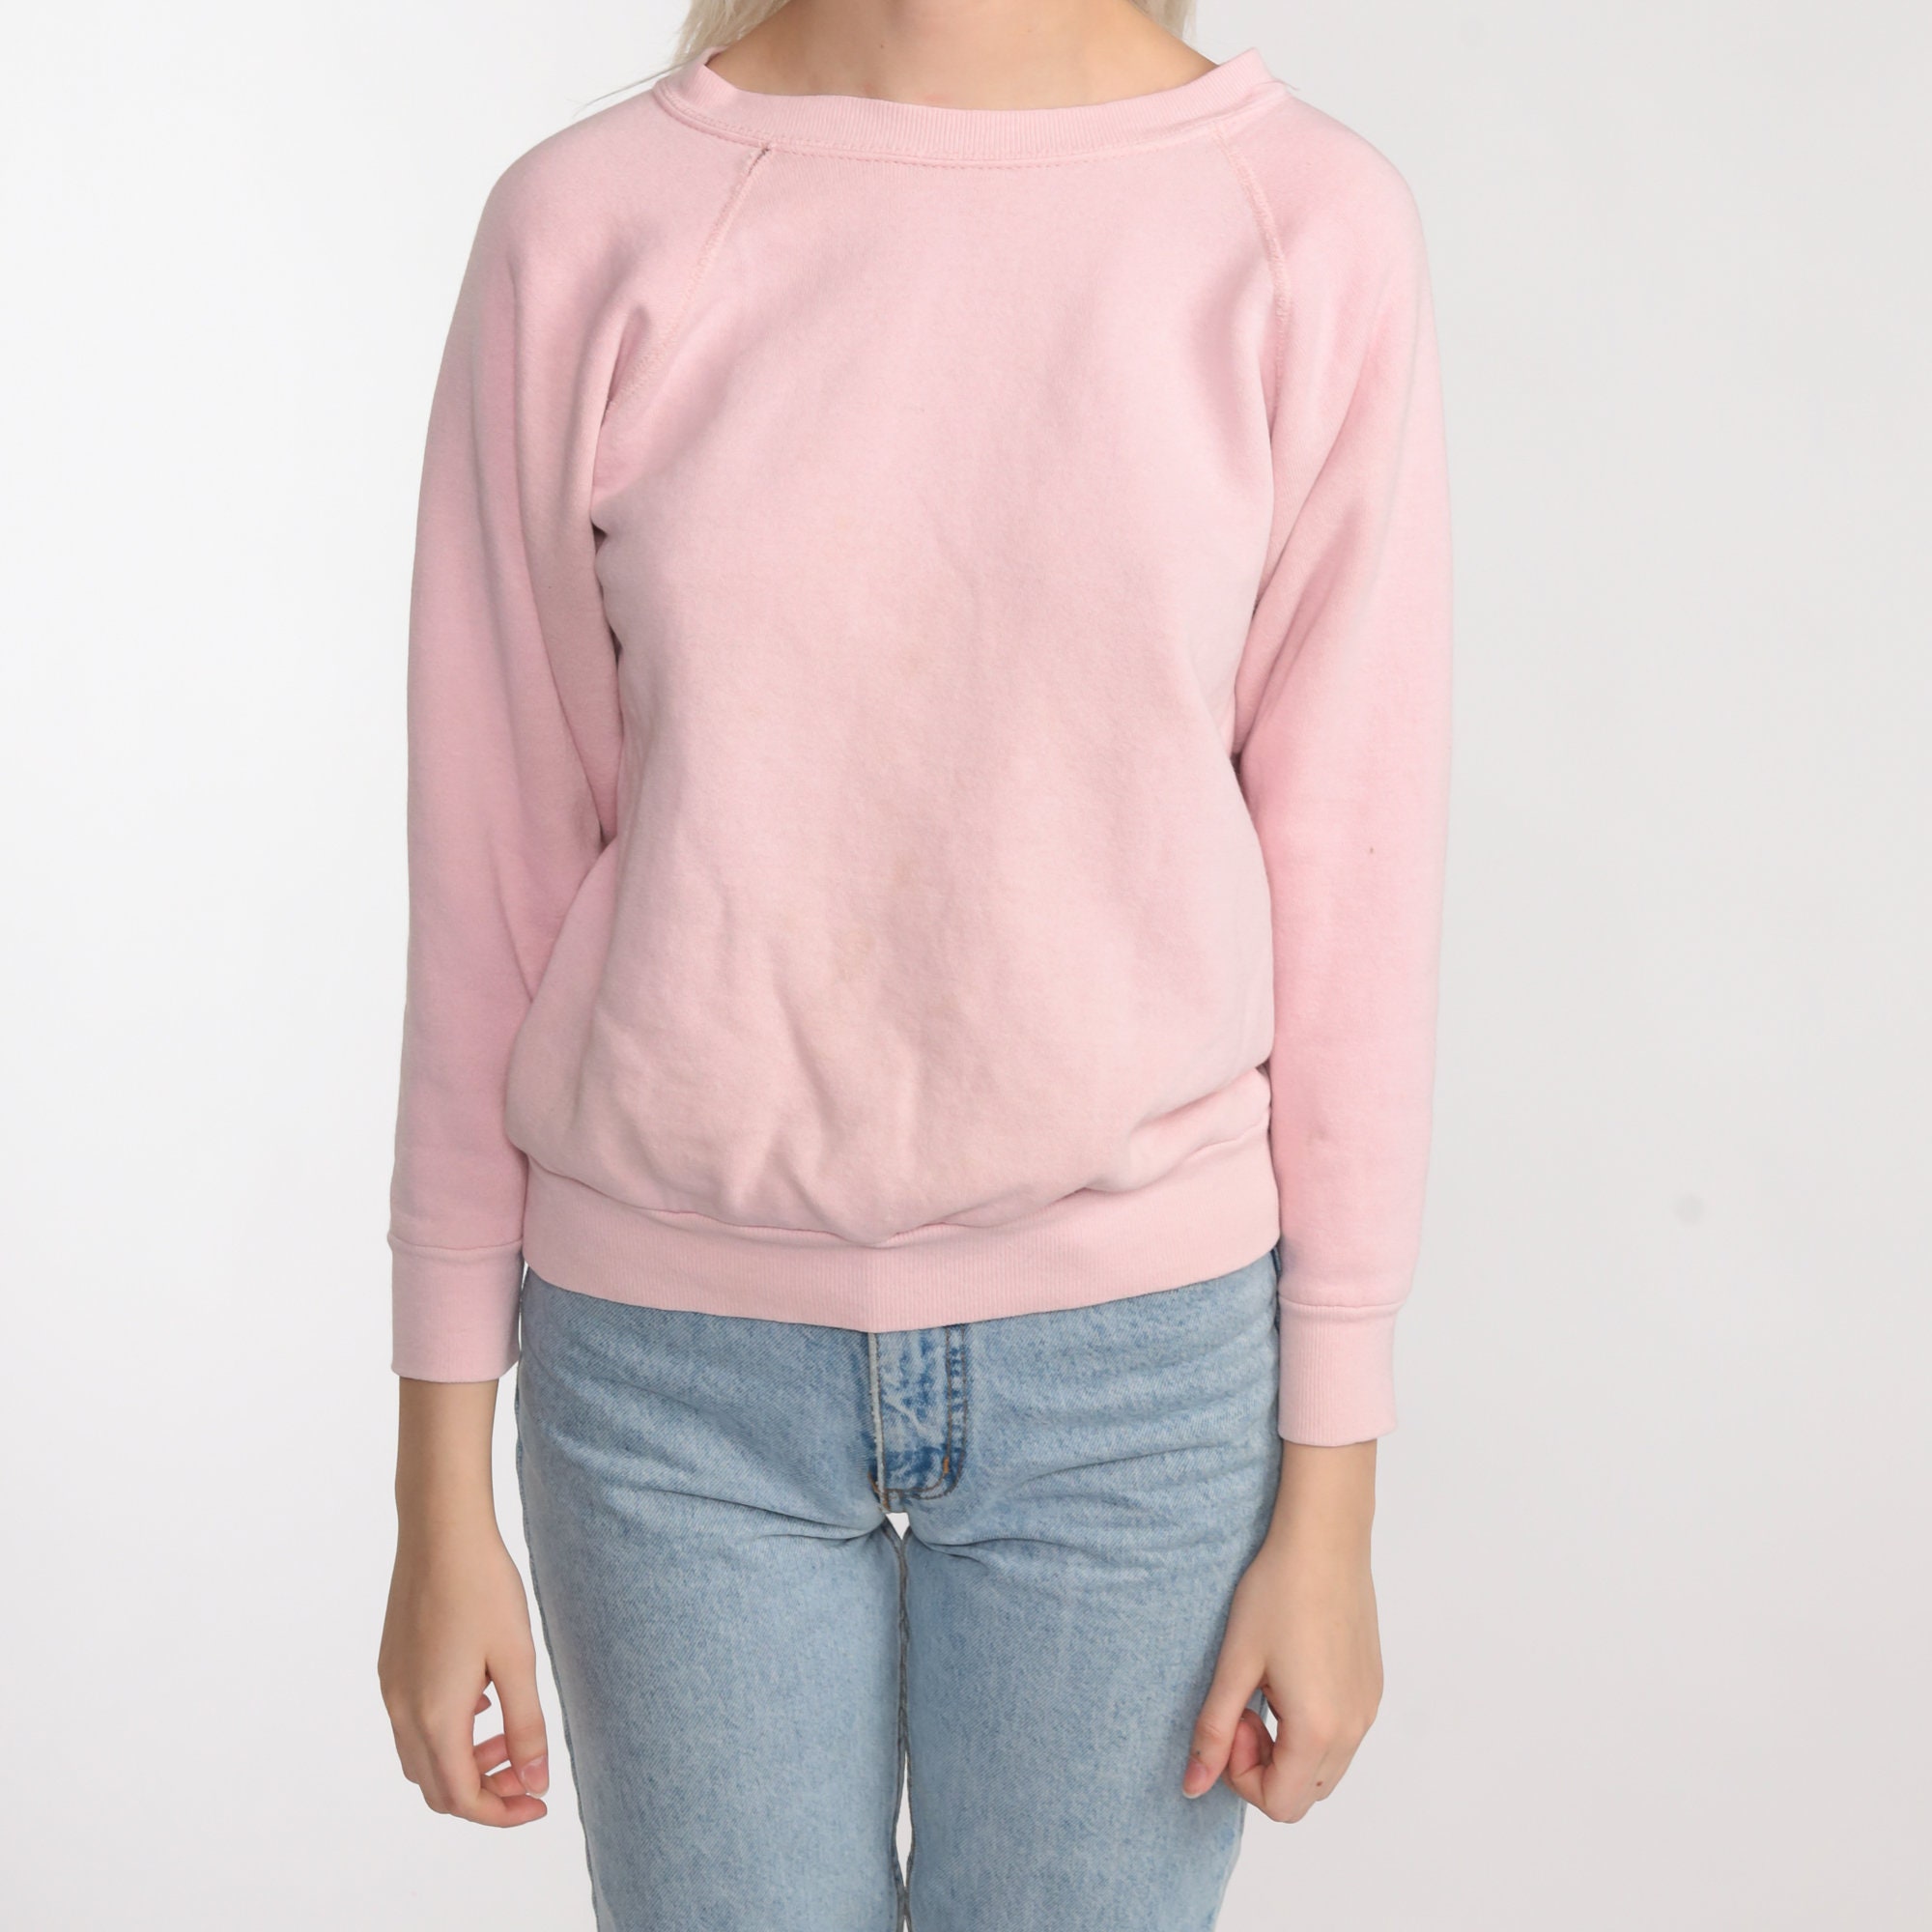 Pink Crewneck Sweatshirt 80s Sweatshirt Raglan Sleeve Plain Long Sleeve ...